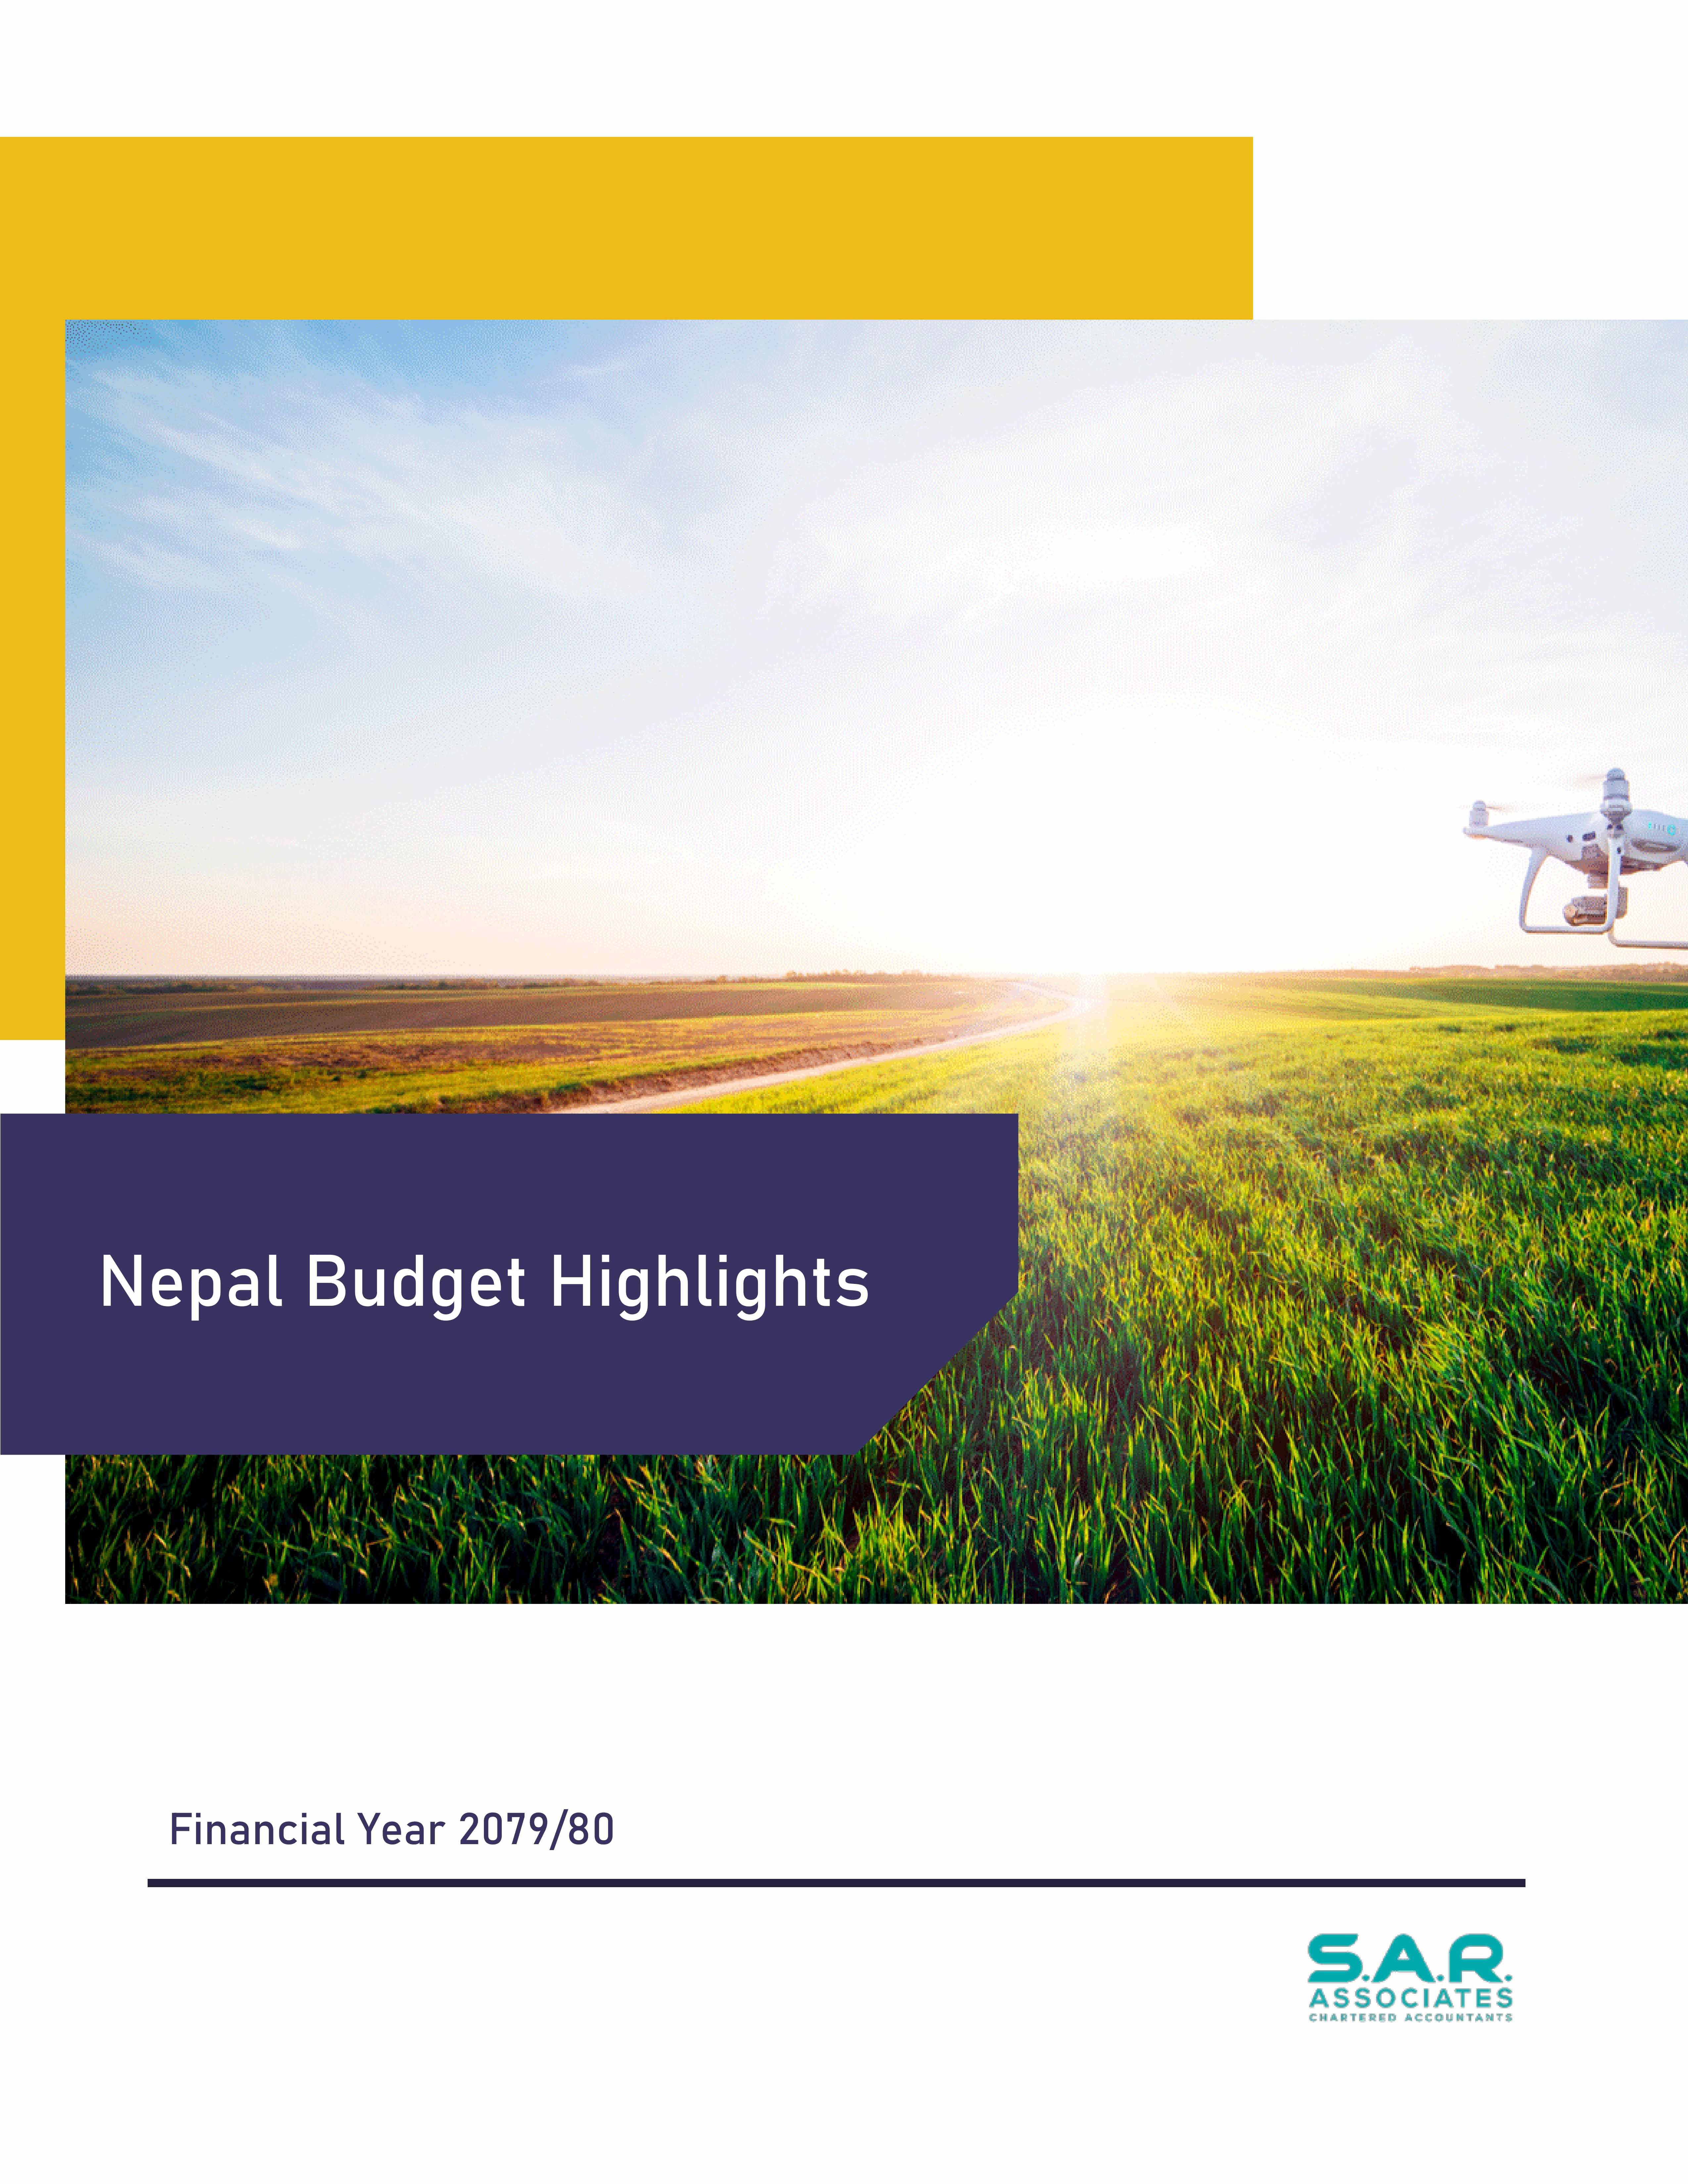 Nepal Budget Highlights 079/80